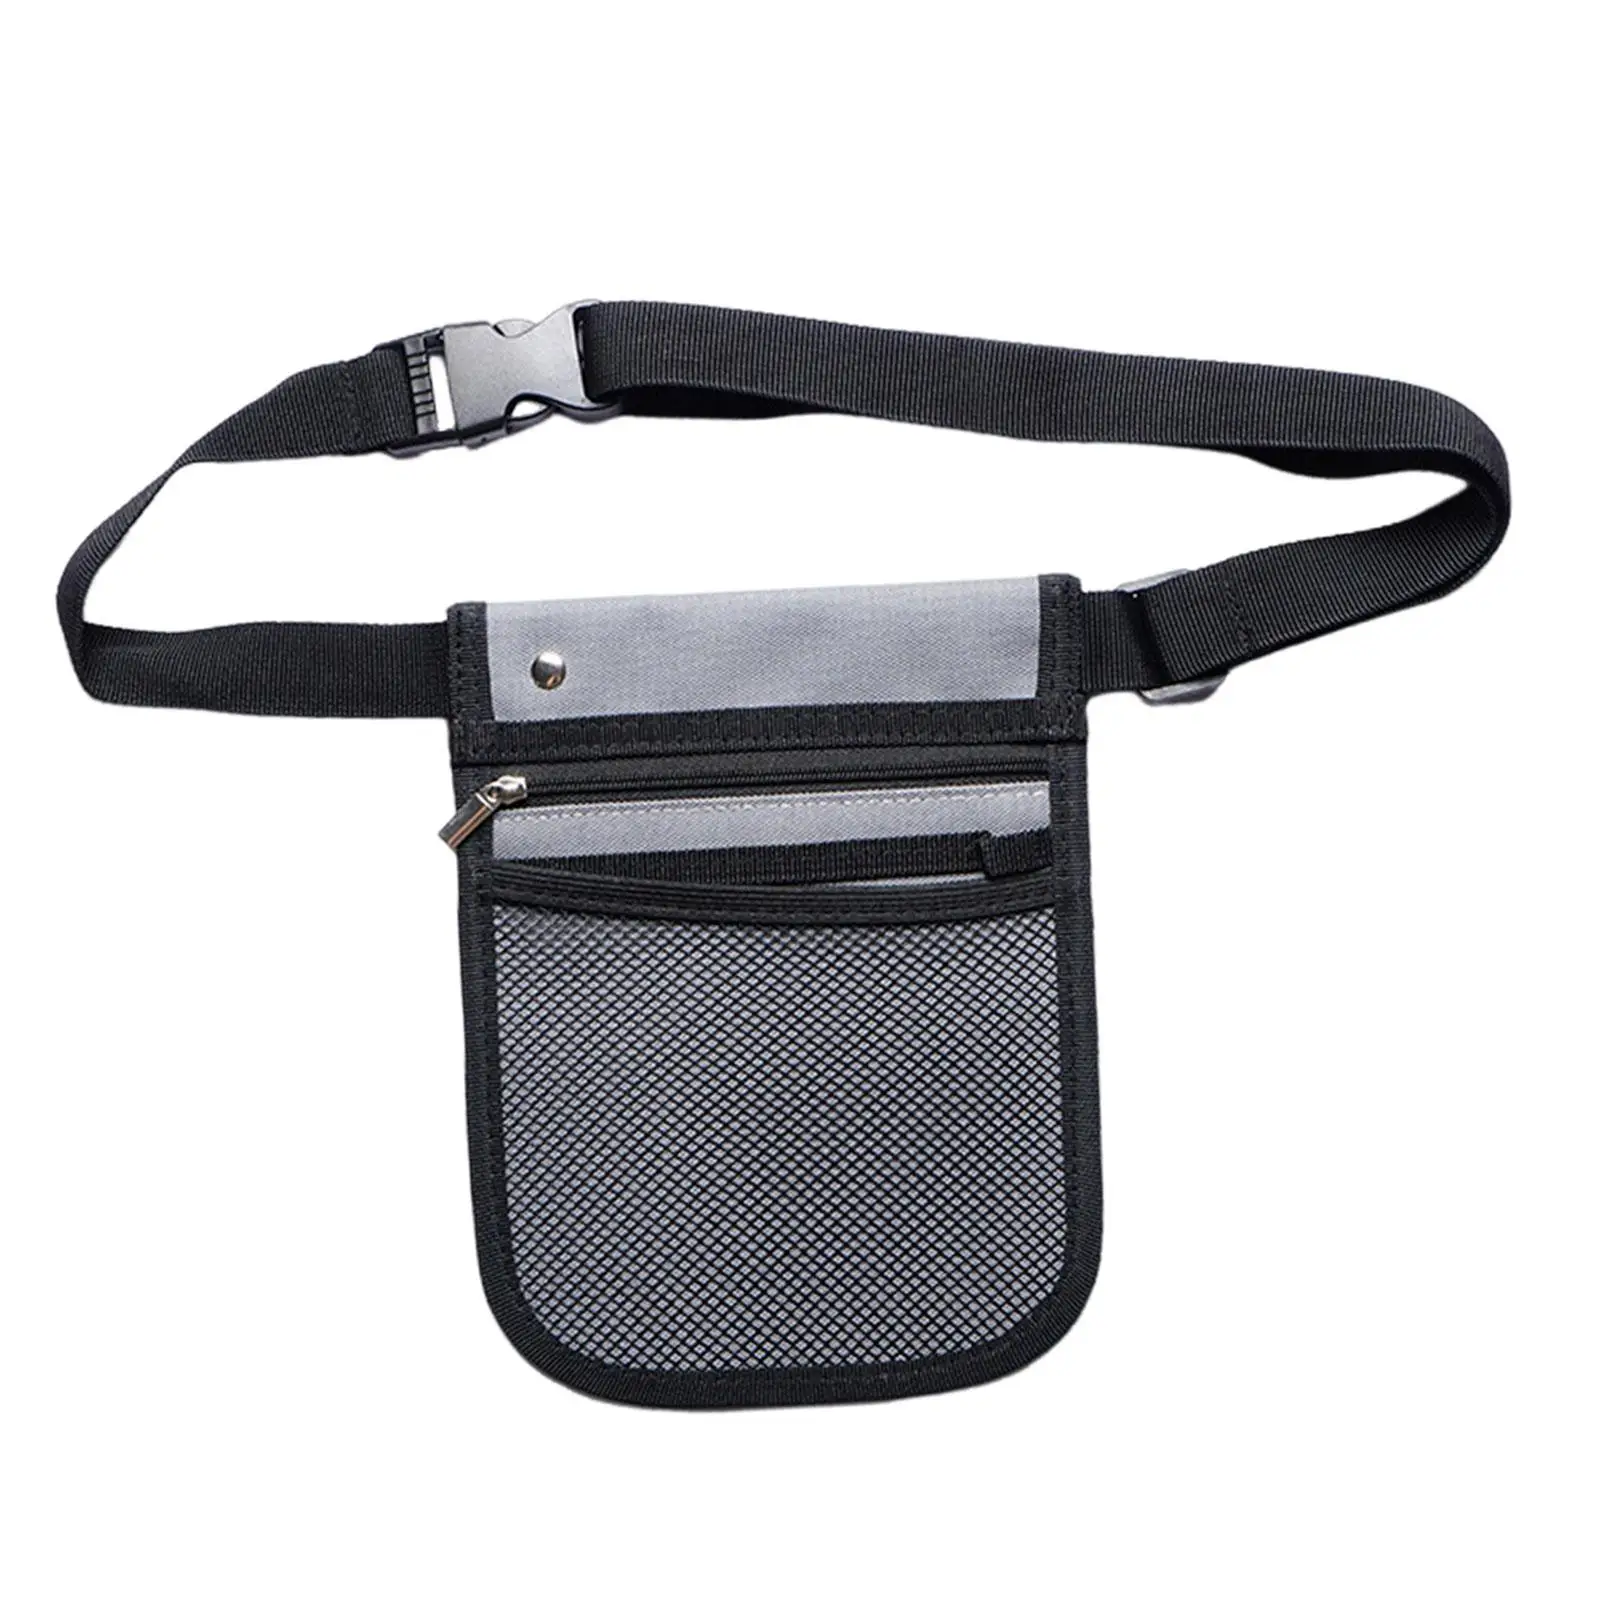  Fanny Pack Organizer Belt Multi Pockets Waist Bag Storage Belt Utility Apron Hip Bag Pouch for Nurses, Trades, Workers